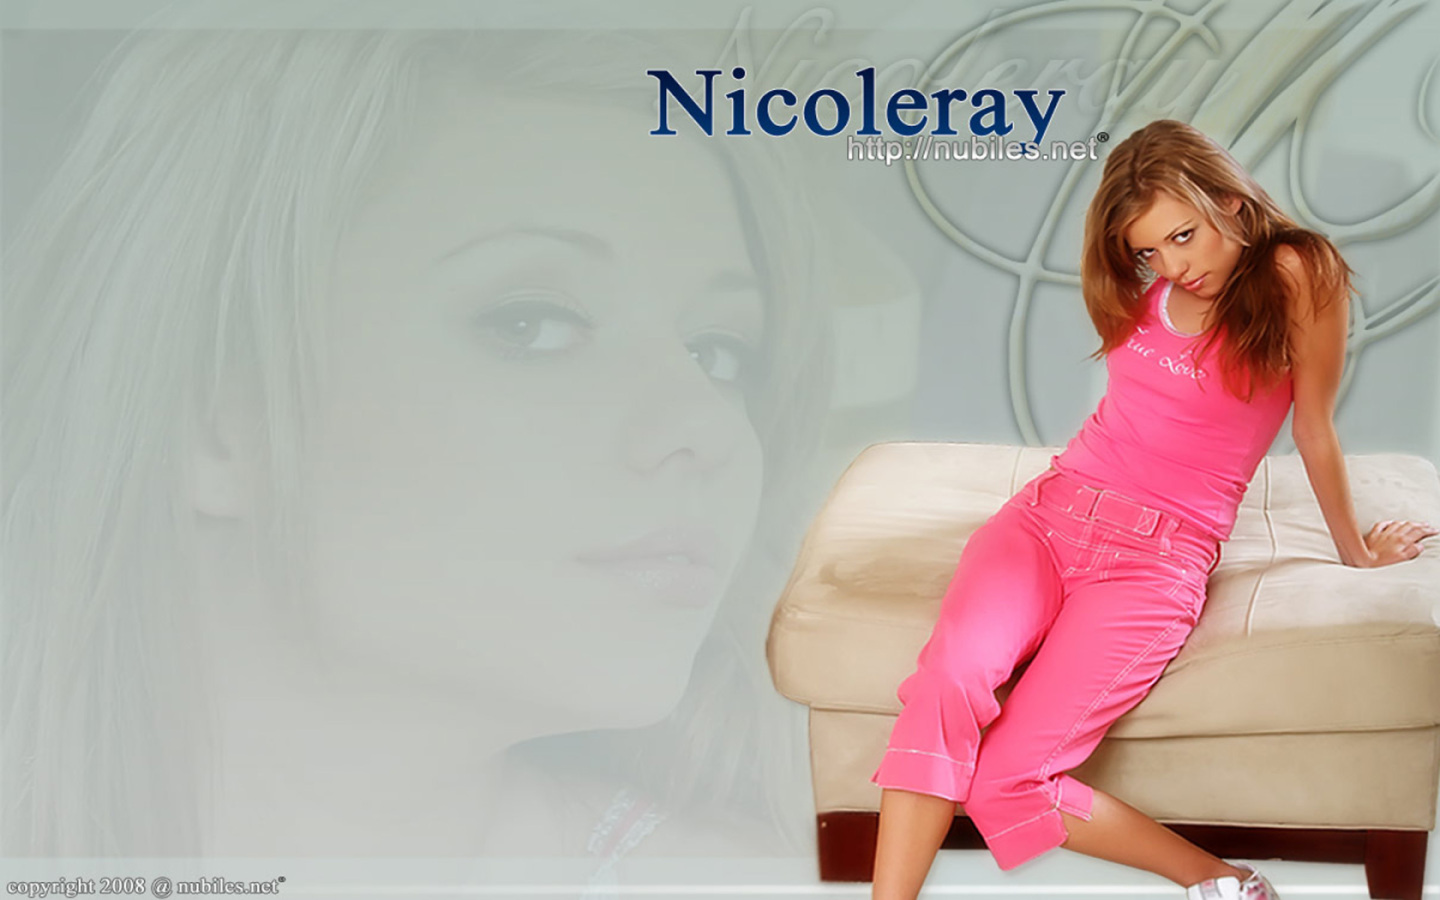 Nicole Ray Wallpaper - 1440x900